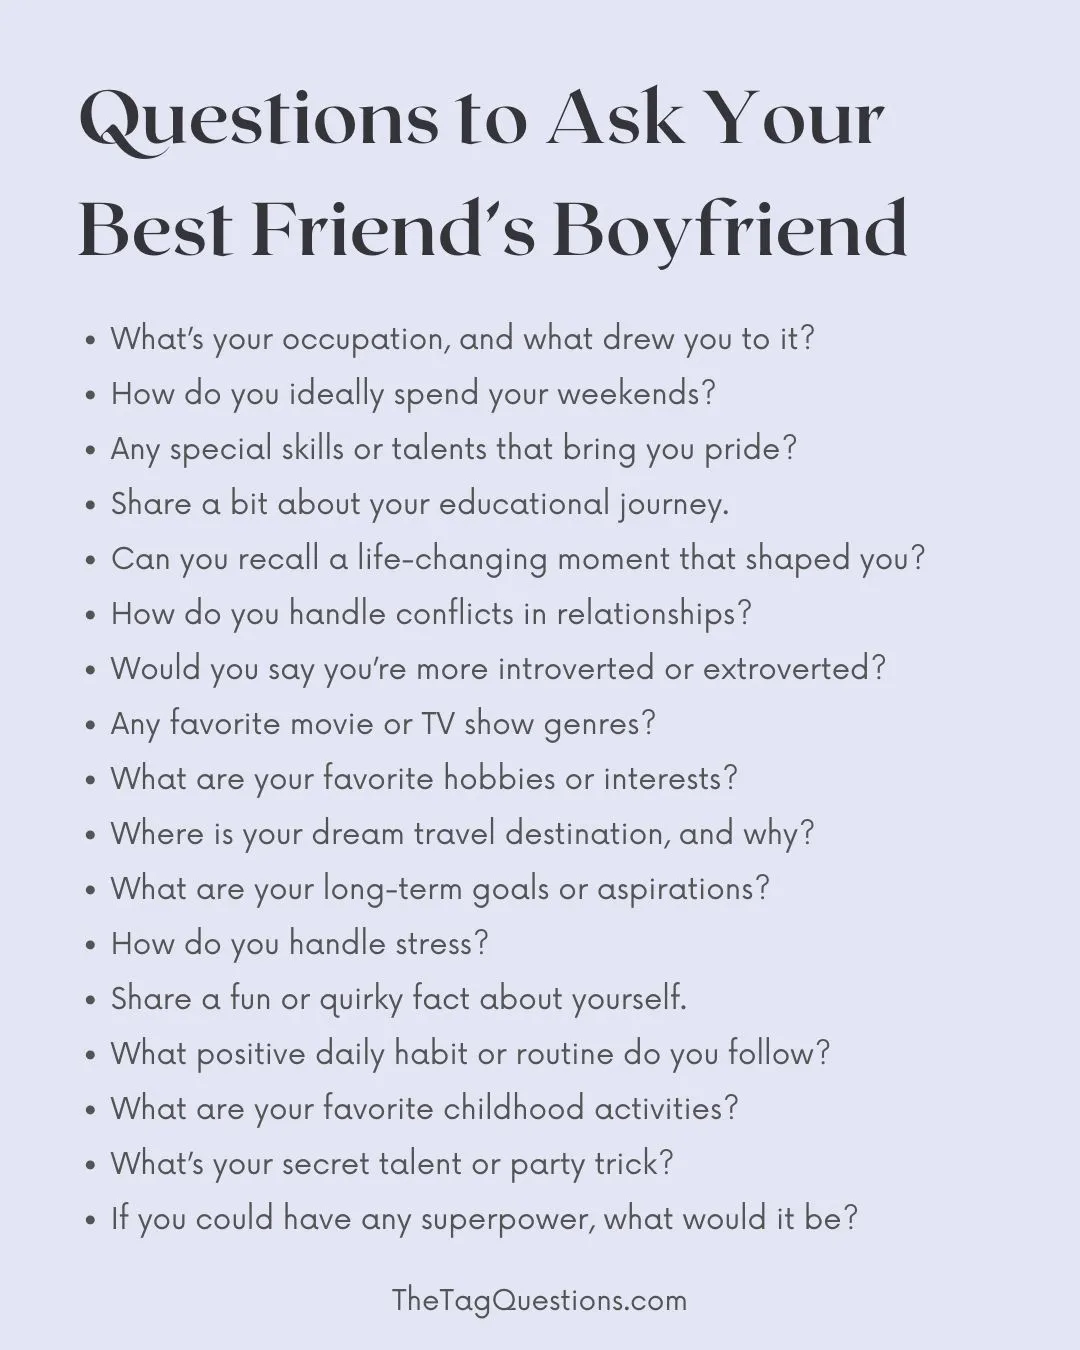 Questions to Ask Your Best Friend's Boyfriend